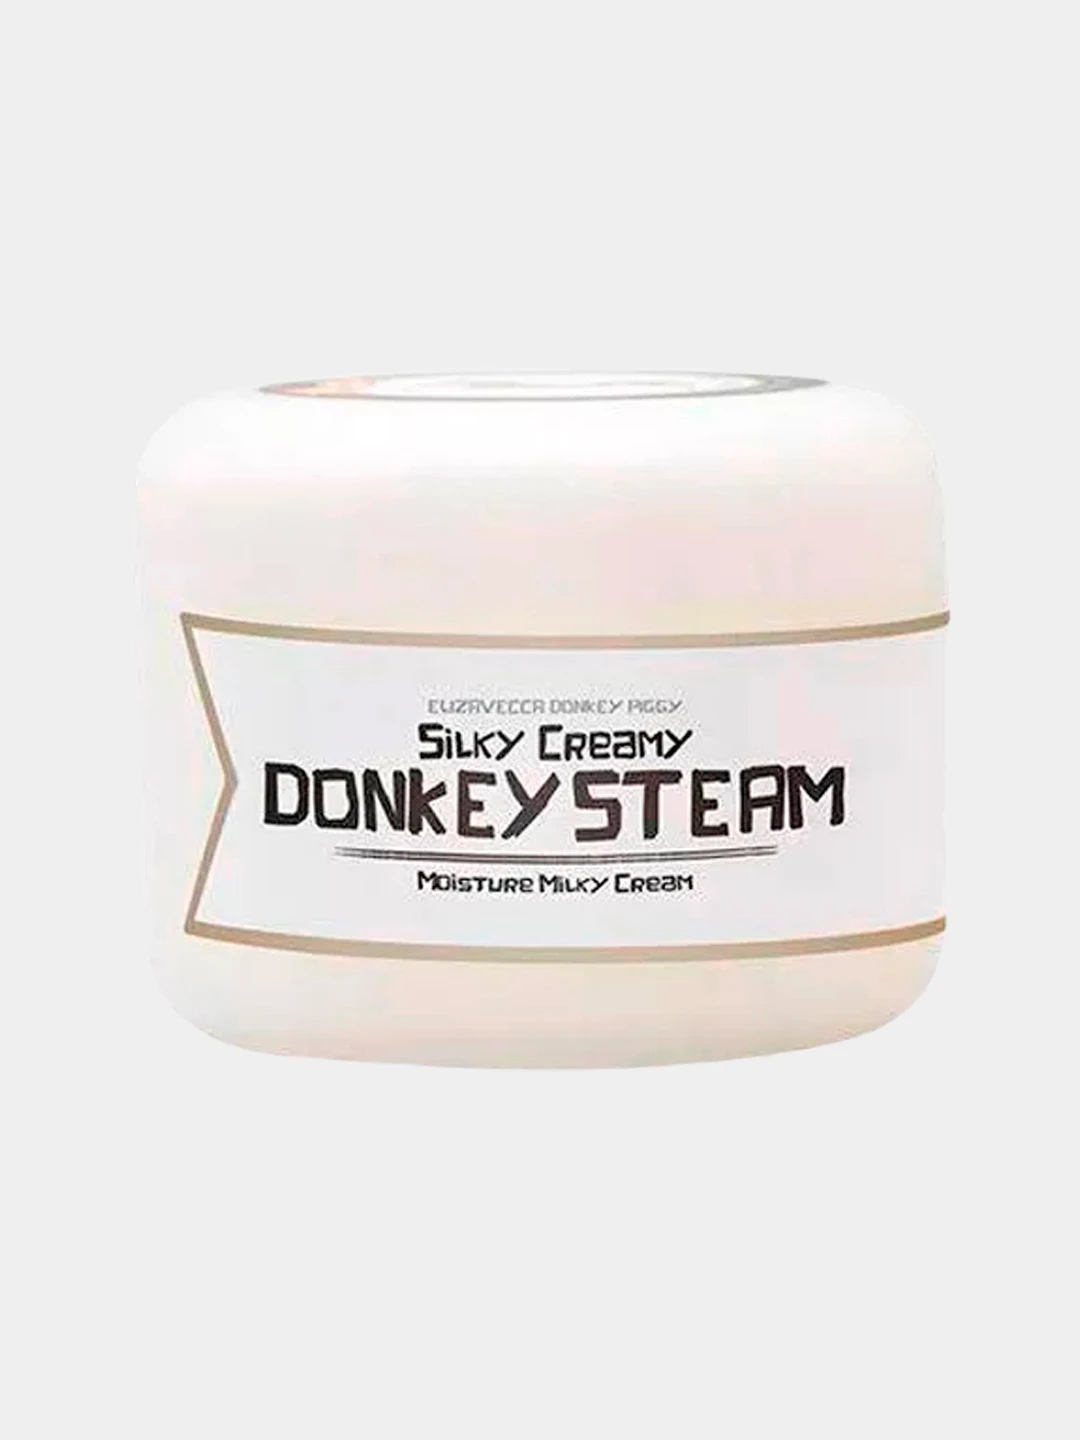 Silky creamy donkey steam moisture milky cream крем фото 116